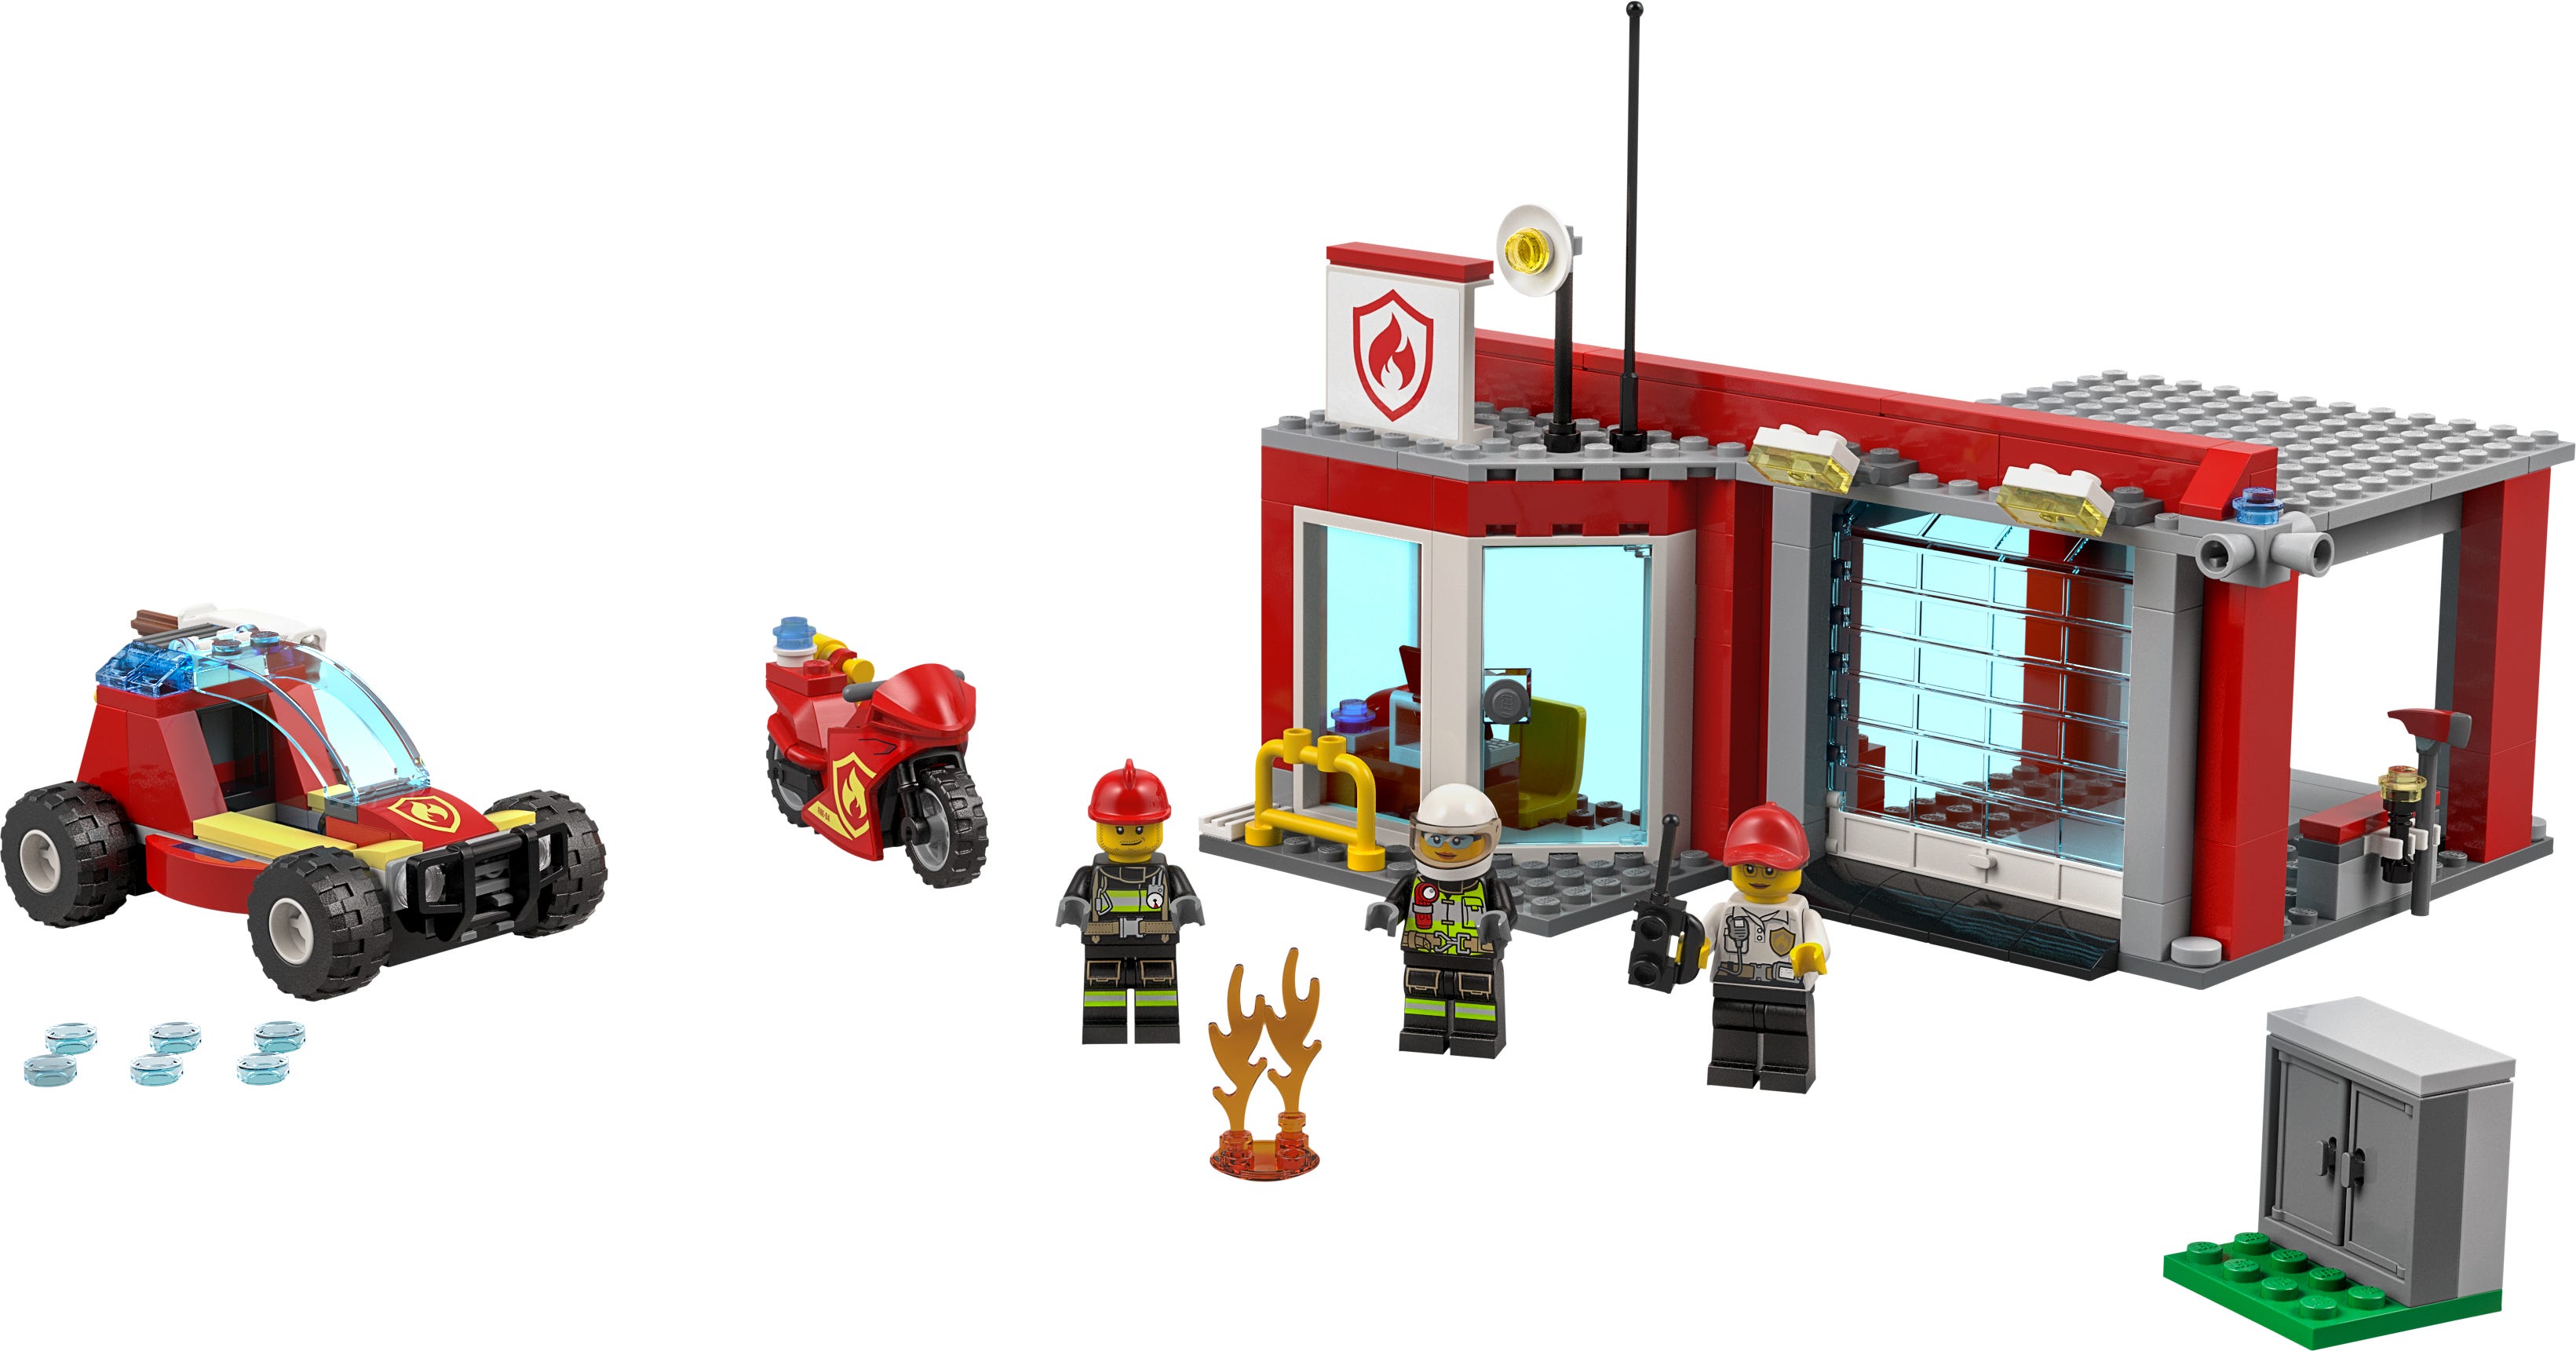 Fire Station Starter Set